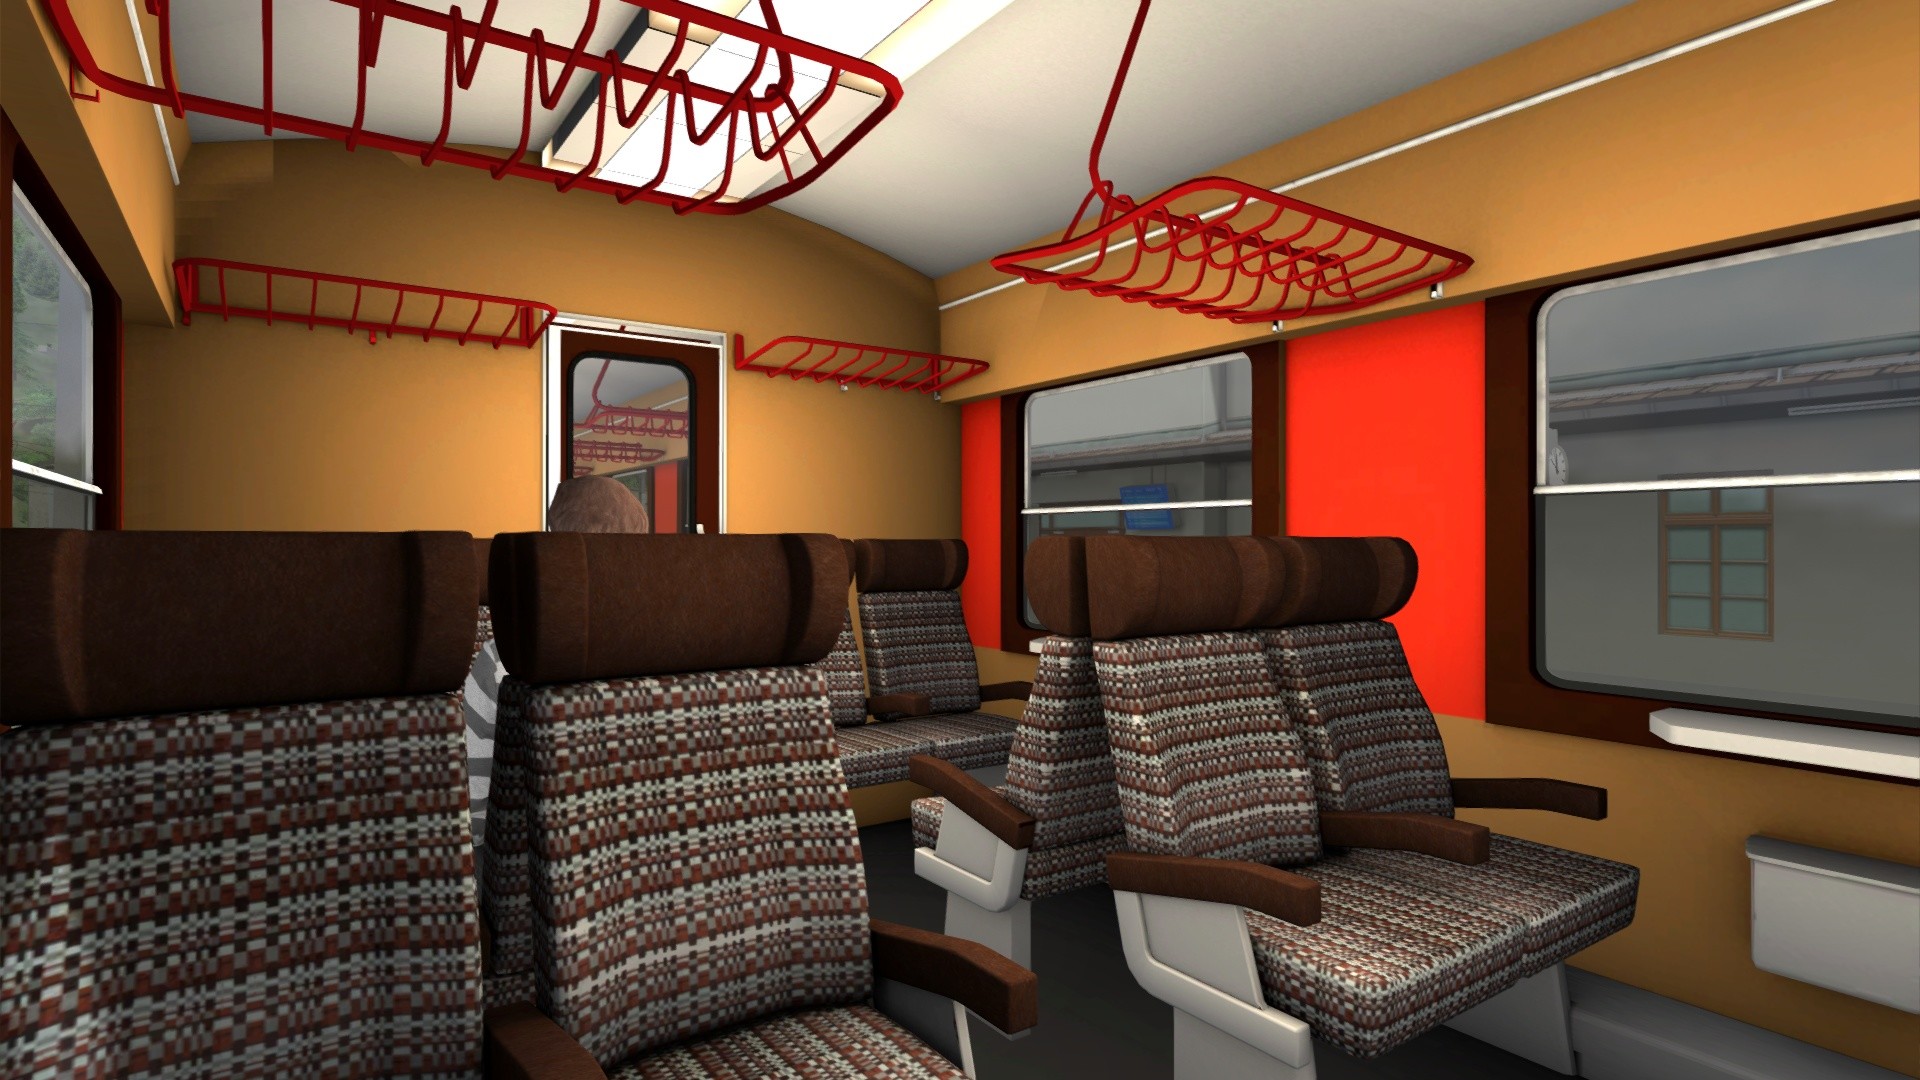 Train Simulator: ÖBB 5047 DMU Add-On screenshot